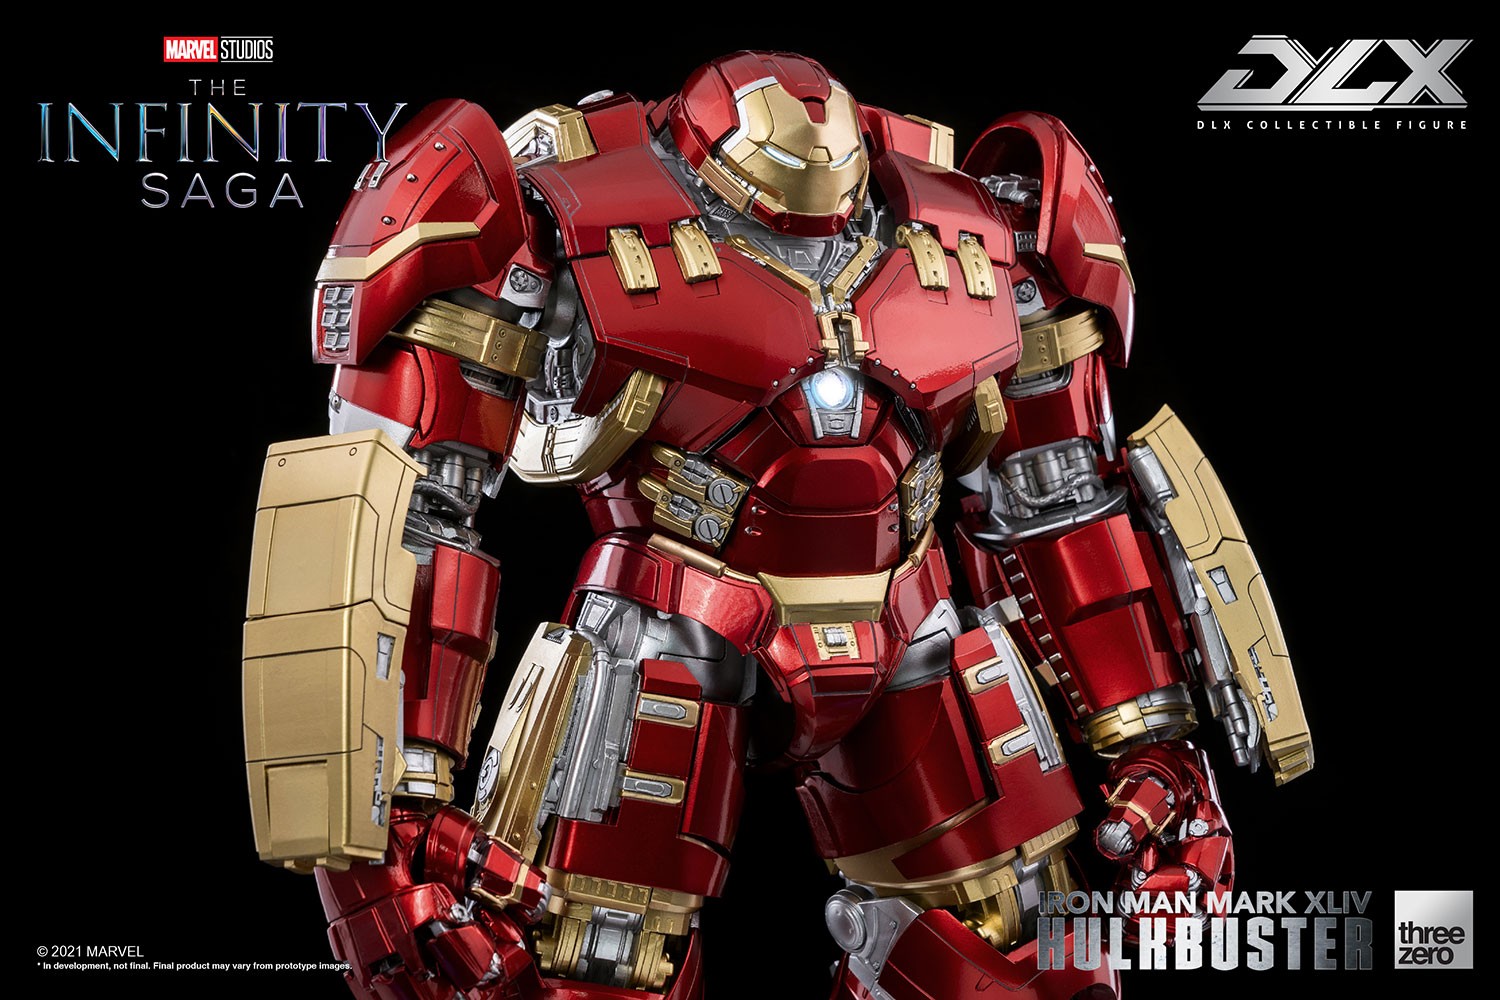 DLX Iron Man Mark XLIV Hulkbuster (Prototype Shown) View 9